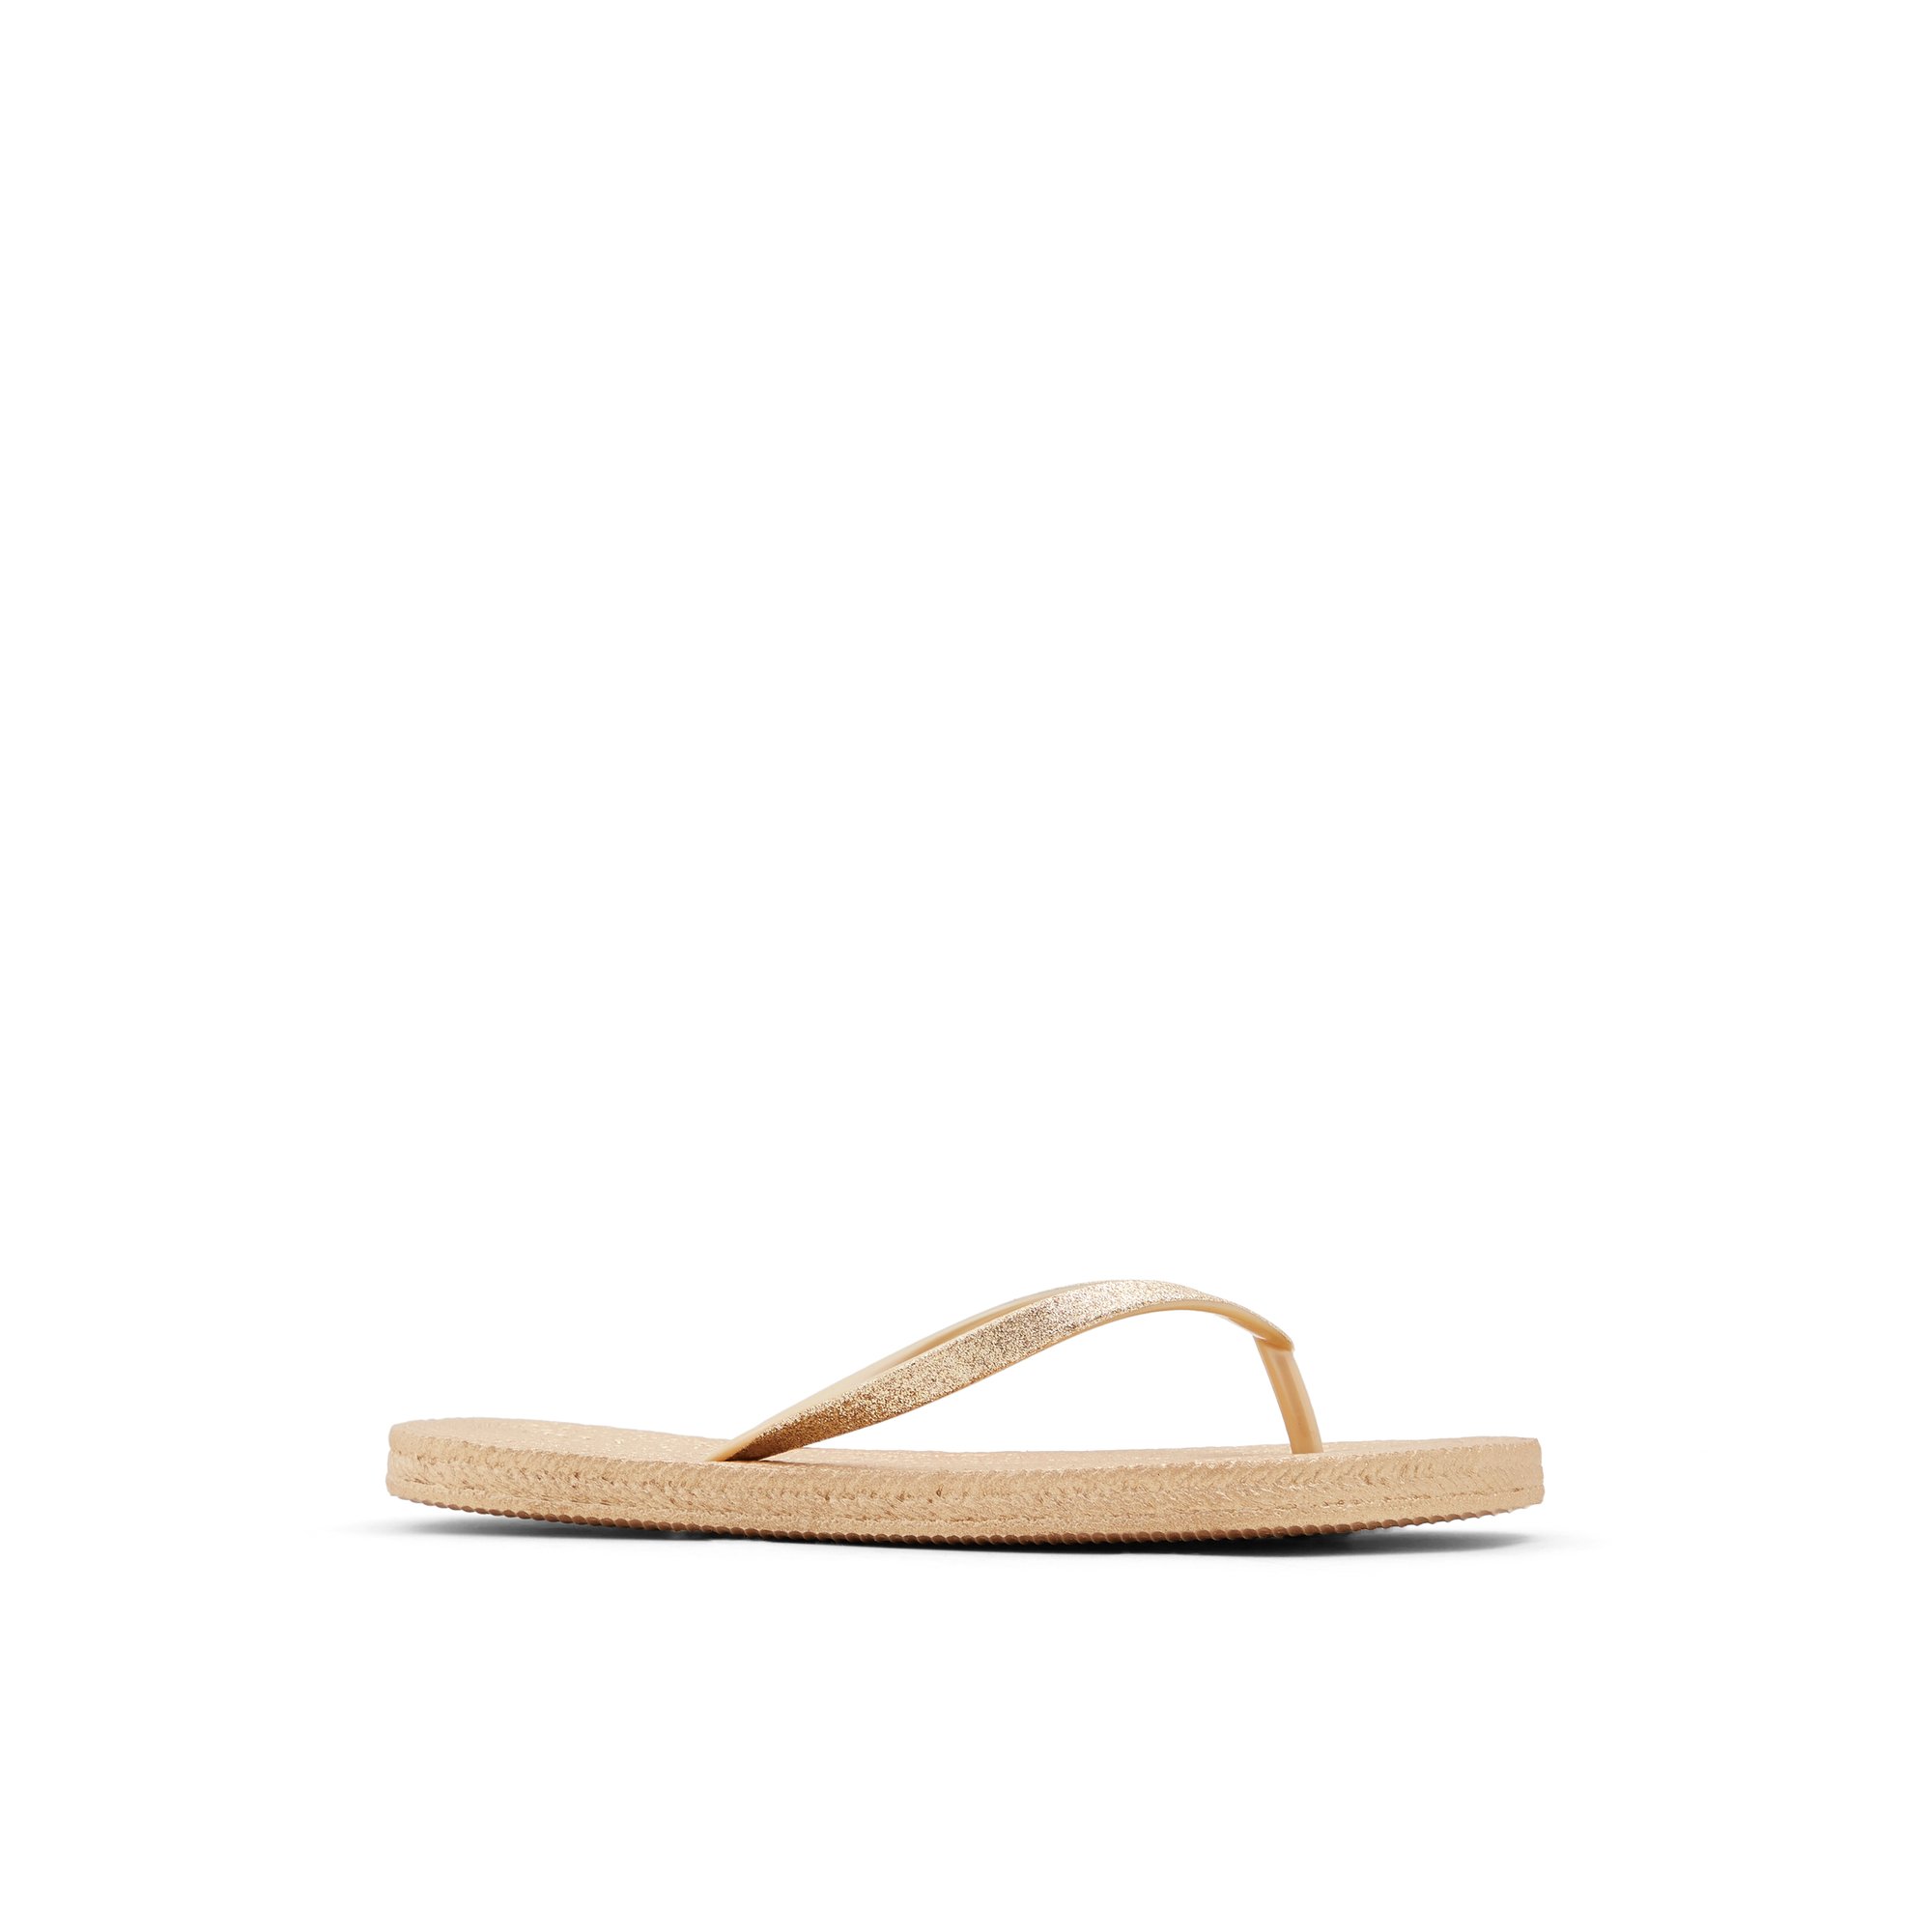 Image of ALDO Aloomba - Women's Flat Sandals - Gold, Size 10